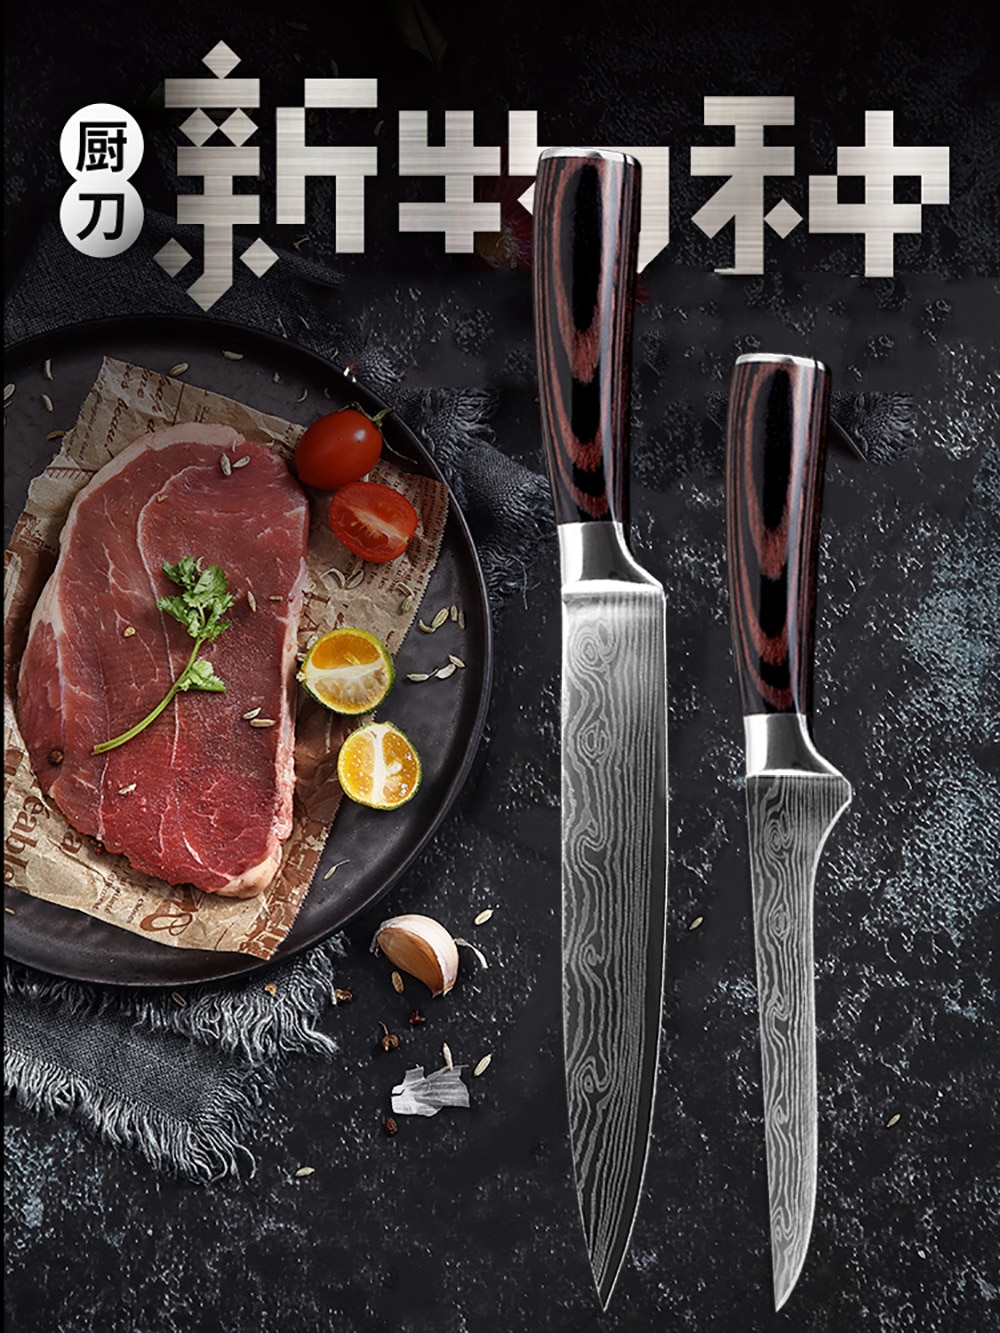 https://www.shopzal.com/wp-content/uploads/2019/09/XITUO-8-inch-japanese-kitchen-knives-Laser-Damascus-pattern-chef-knife-Sharp-Santoku-Cleaver-Slicing-Utility-5.jpg